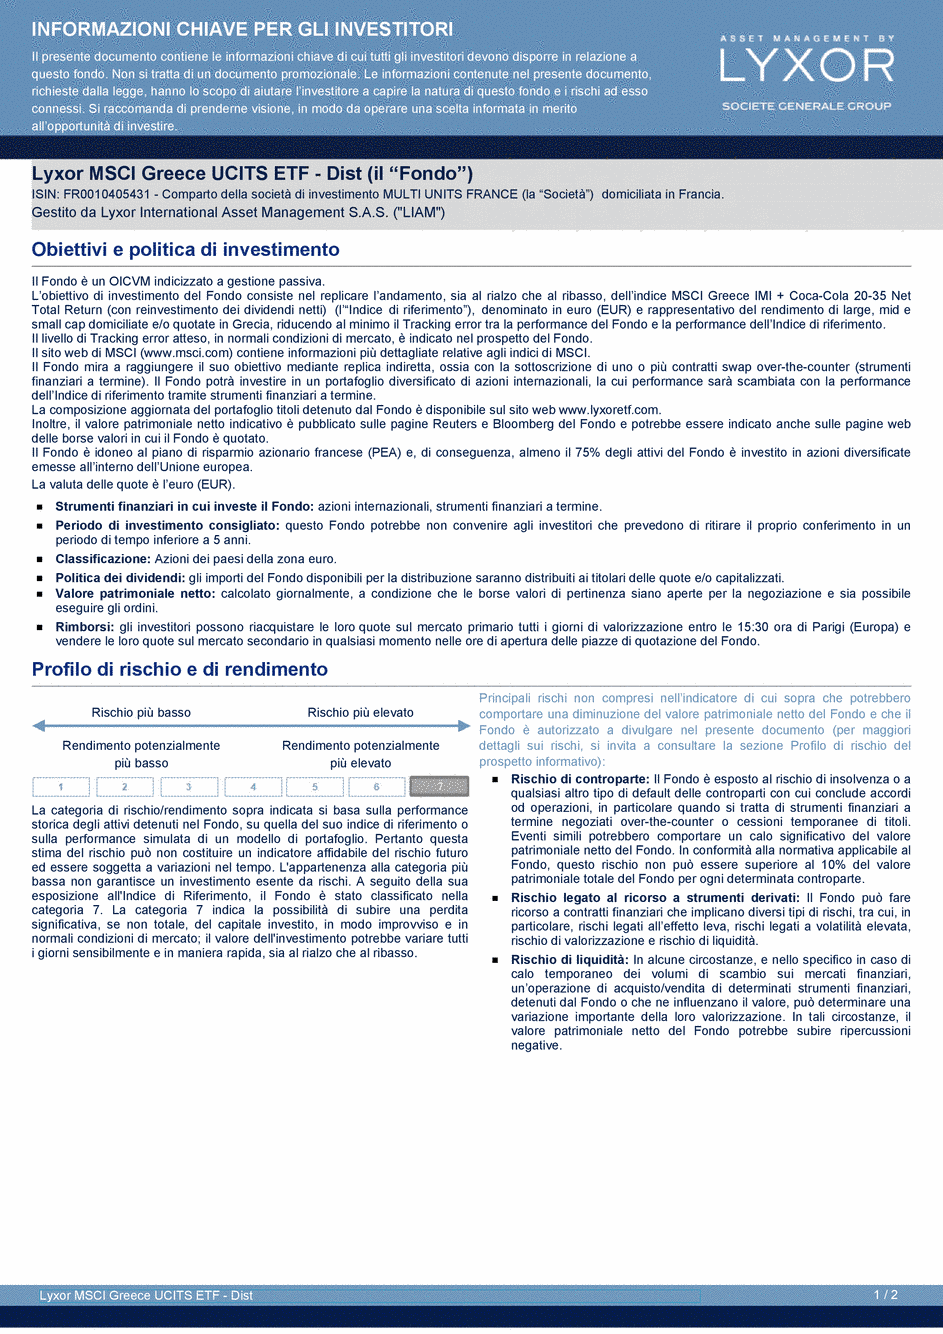 DICI Lyxor MSCI Greece UCITS ETF - Dist - 19/02/2020 - Italien